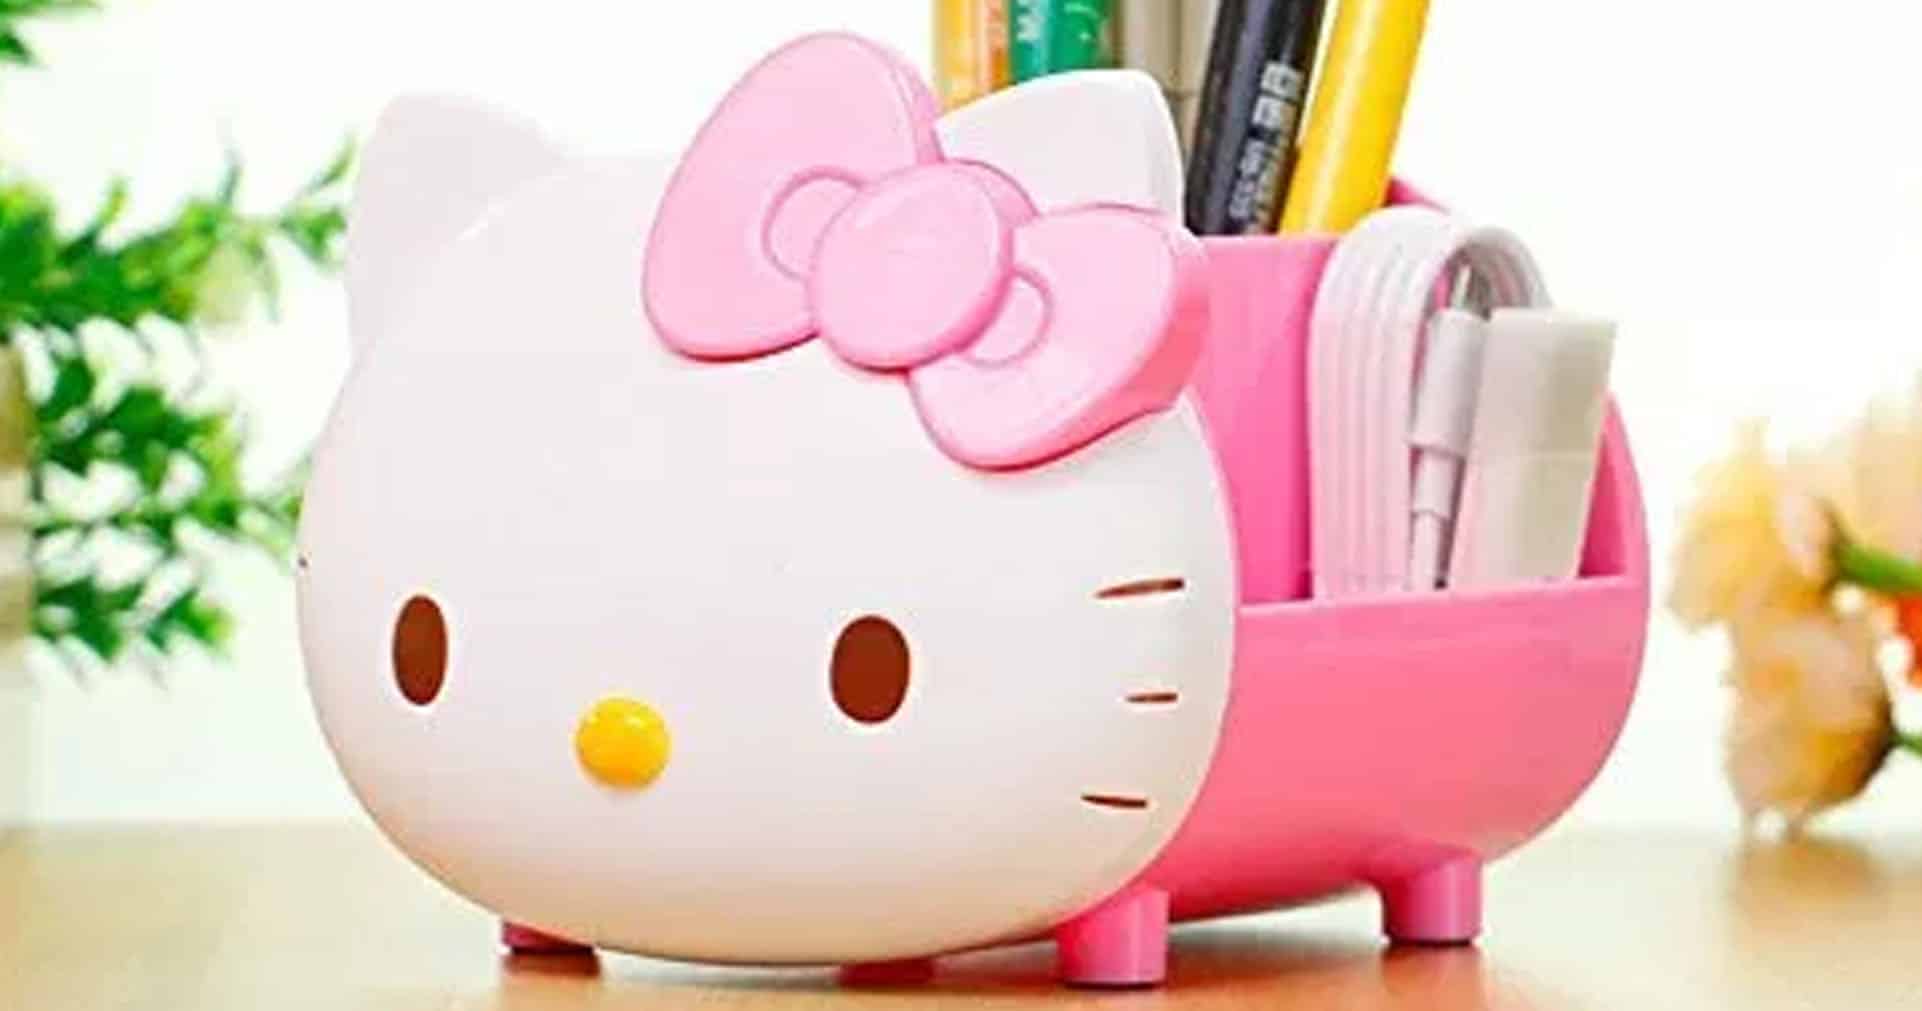 Hello Kitty Pencil Holder